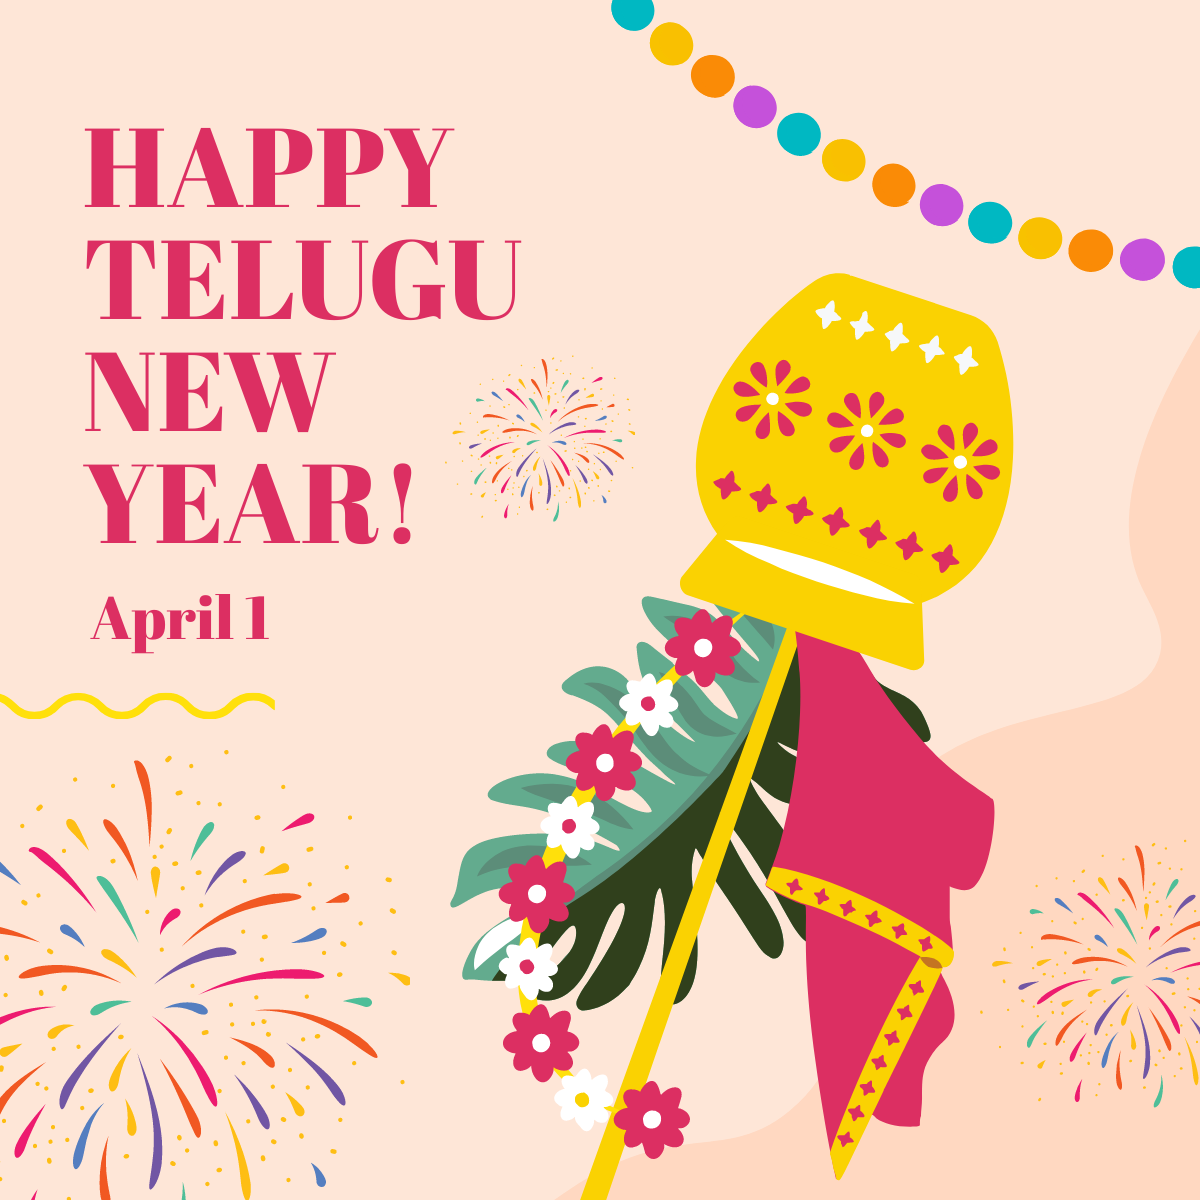 Happy Telugu New Year Linkedin Post